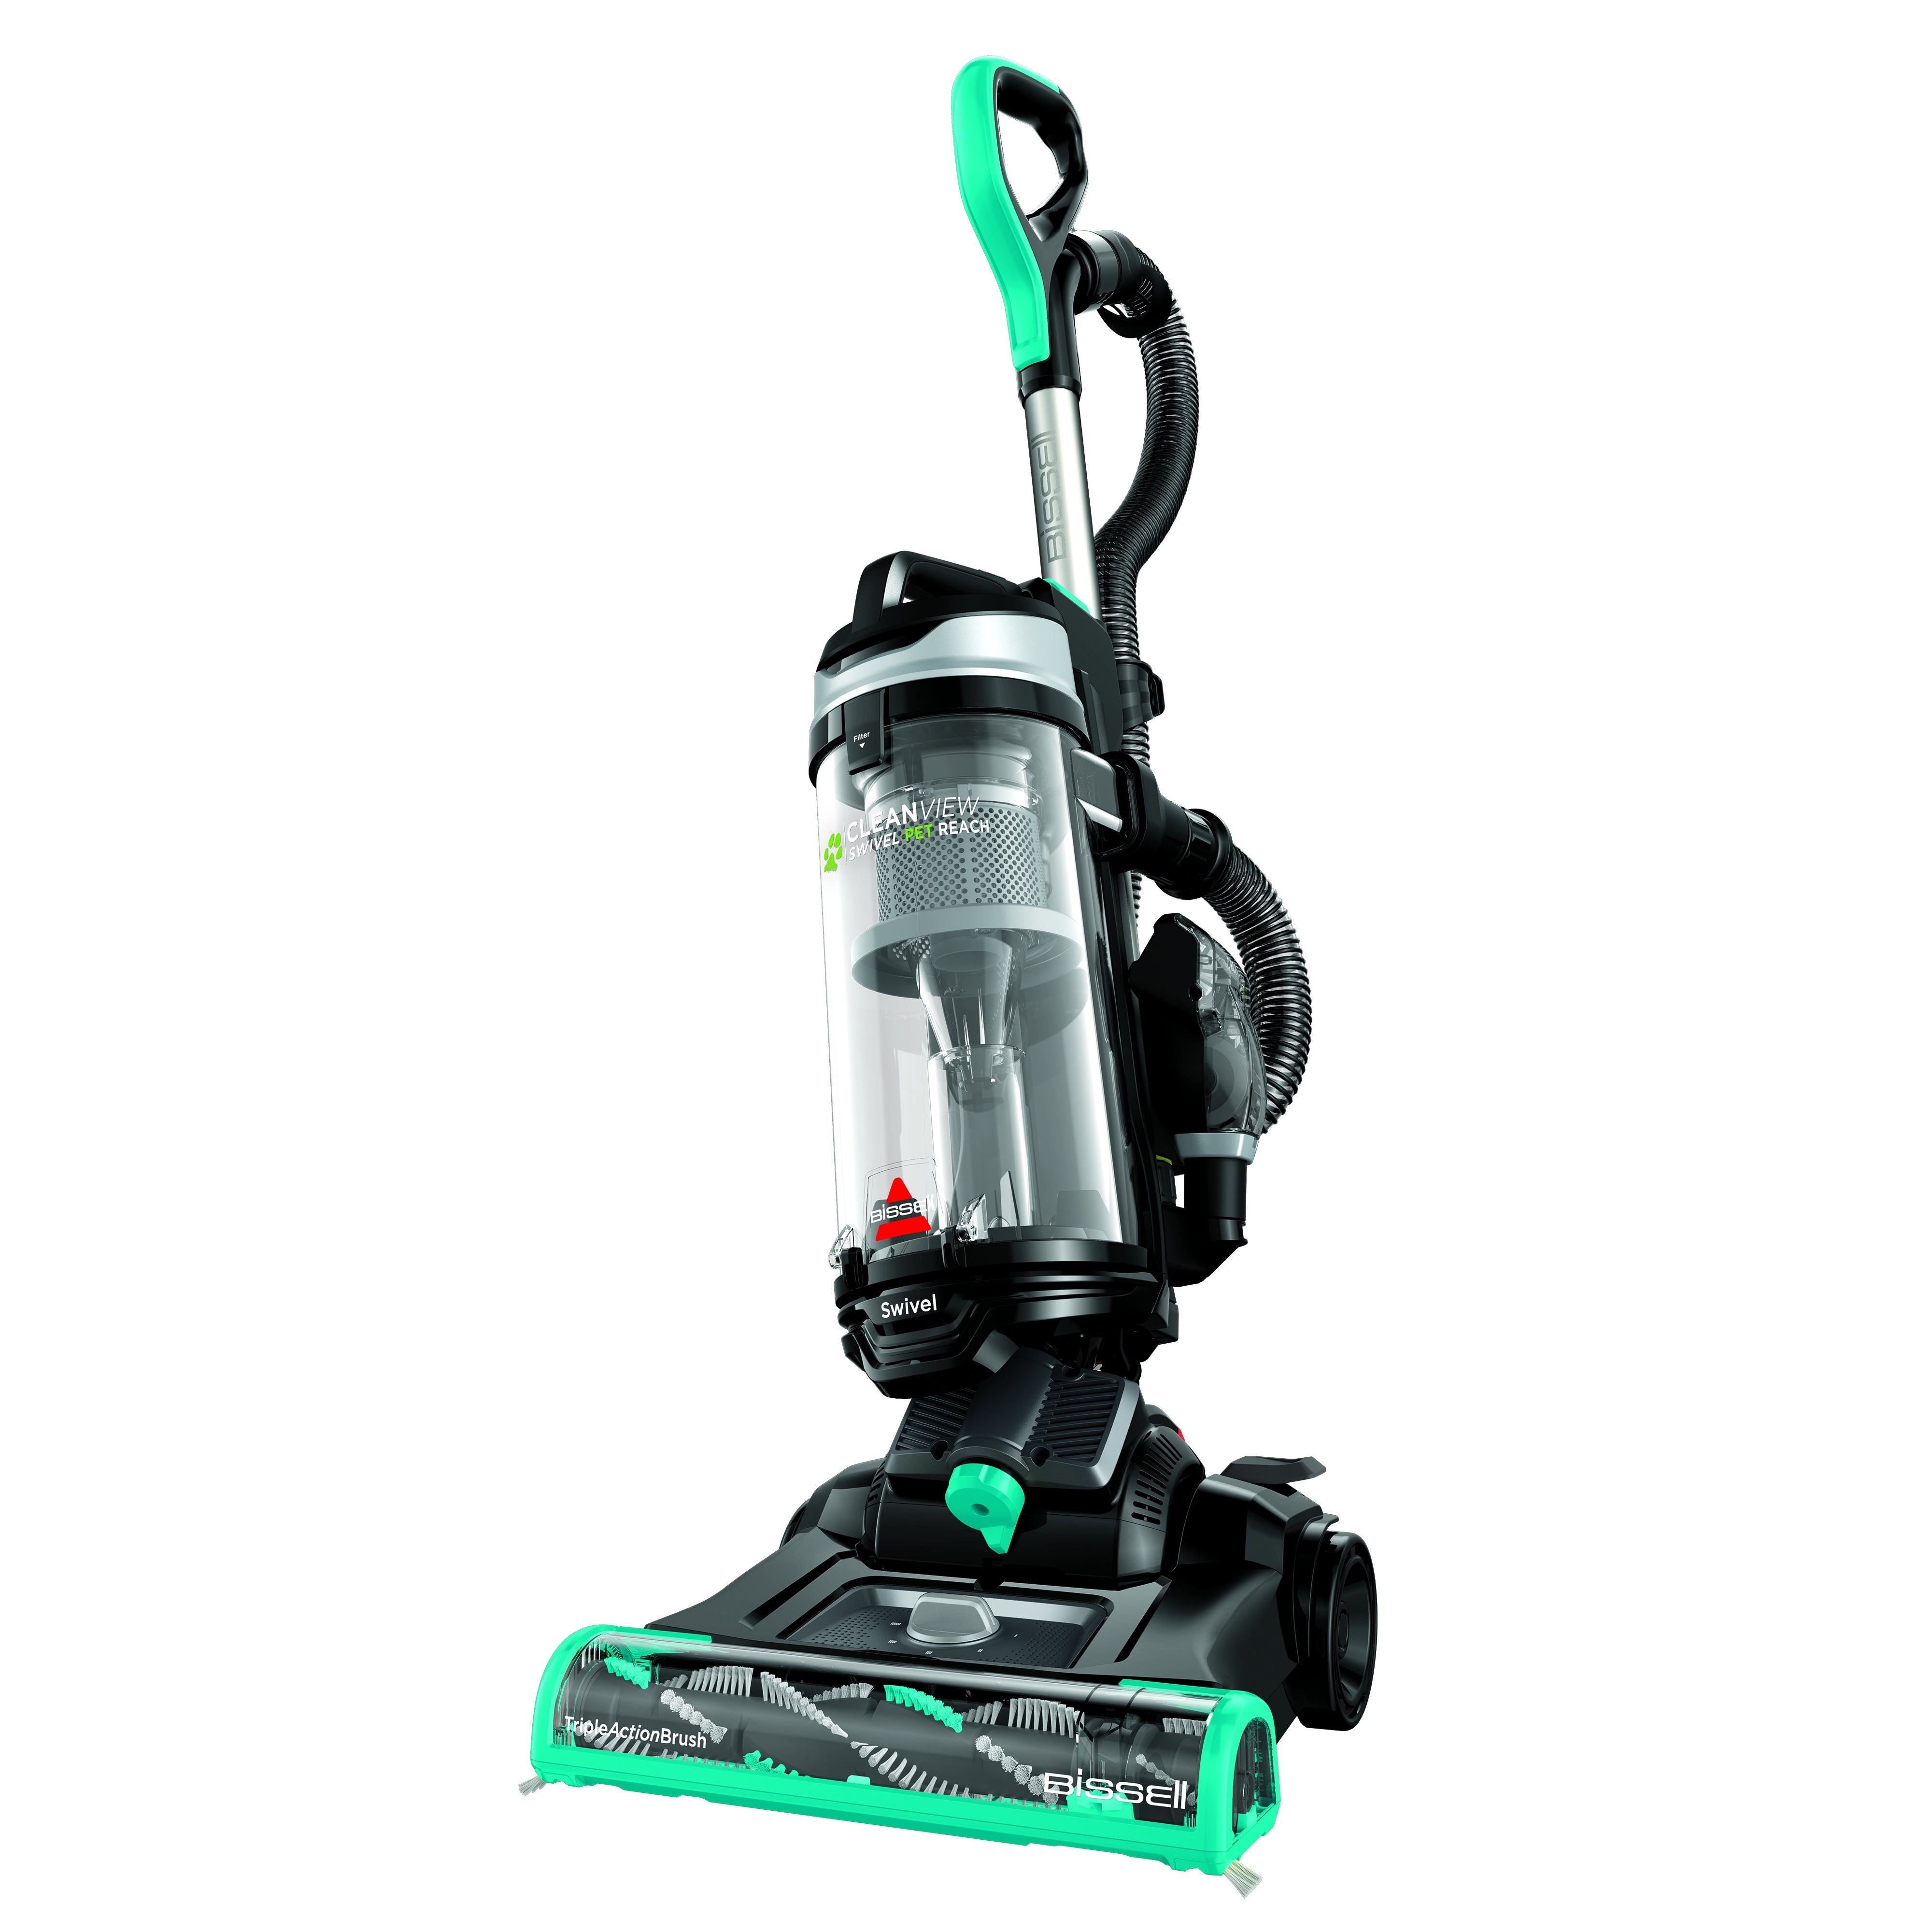 CleanView Swivel Pet Reach Upright Vacuum